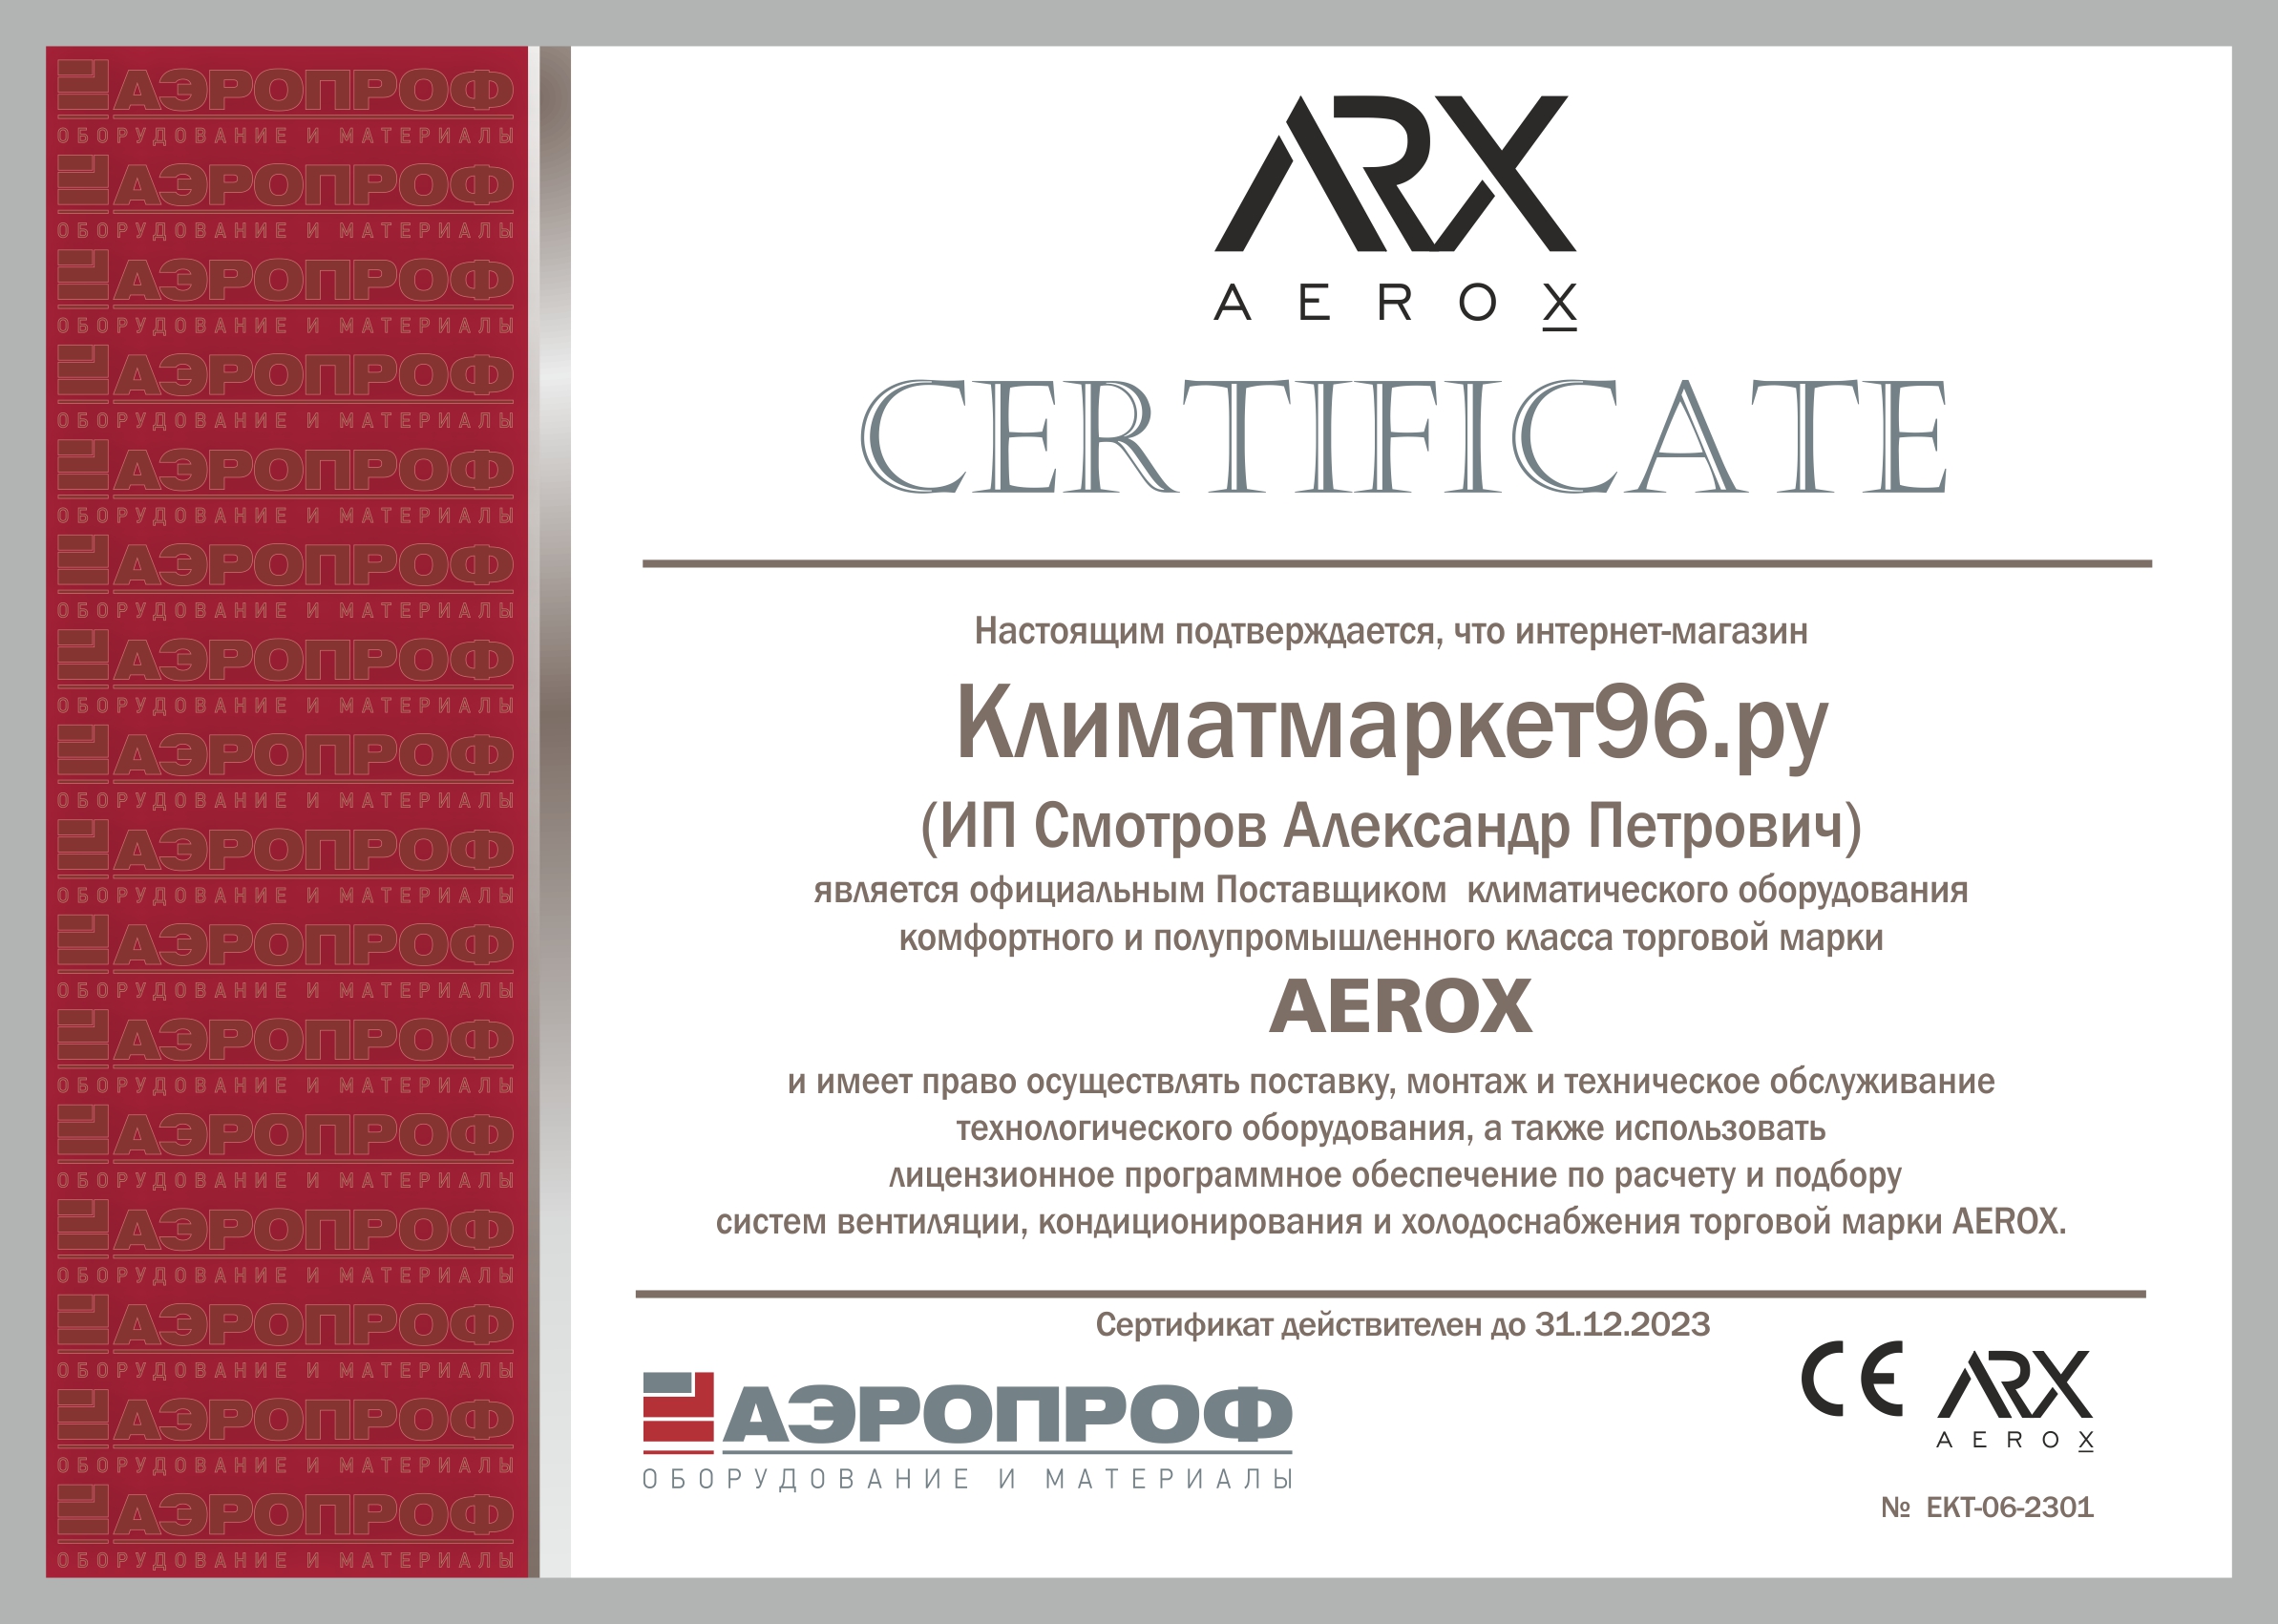 sert23-km96-arx Kondicioner Aero ARS-II-18IHN21D6-01/ARS-II-18OHN21D6-01 kypit v Ekaterinbyrge v internet-magazine KlimatMarket96.ry Сертификат официального дилера